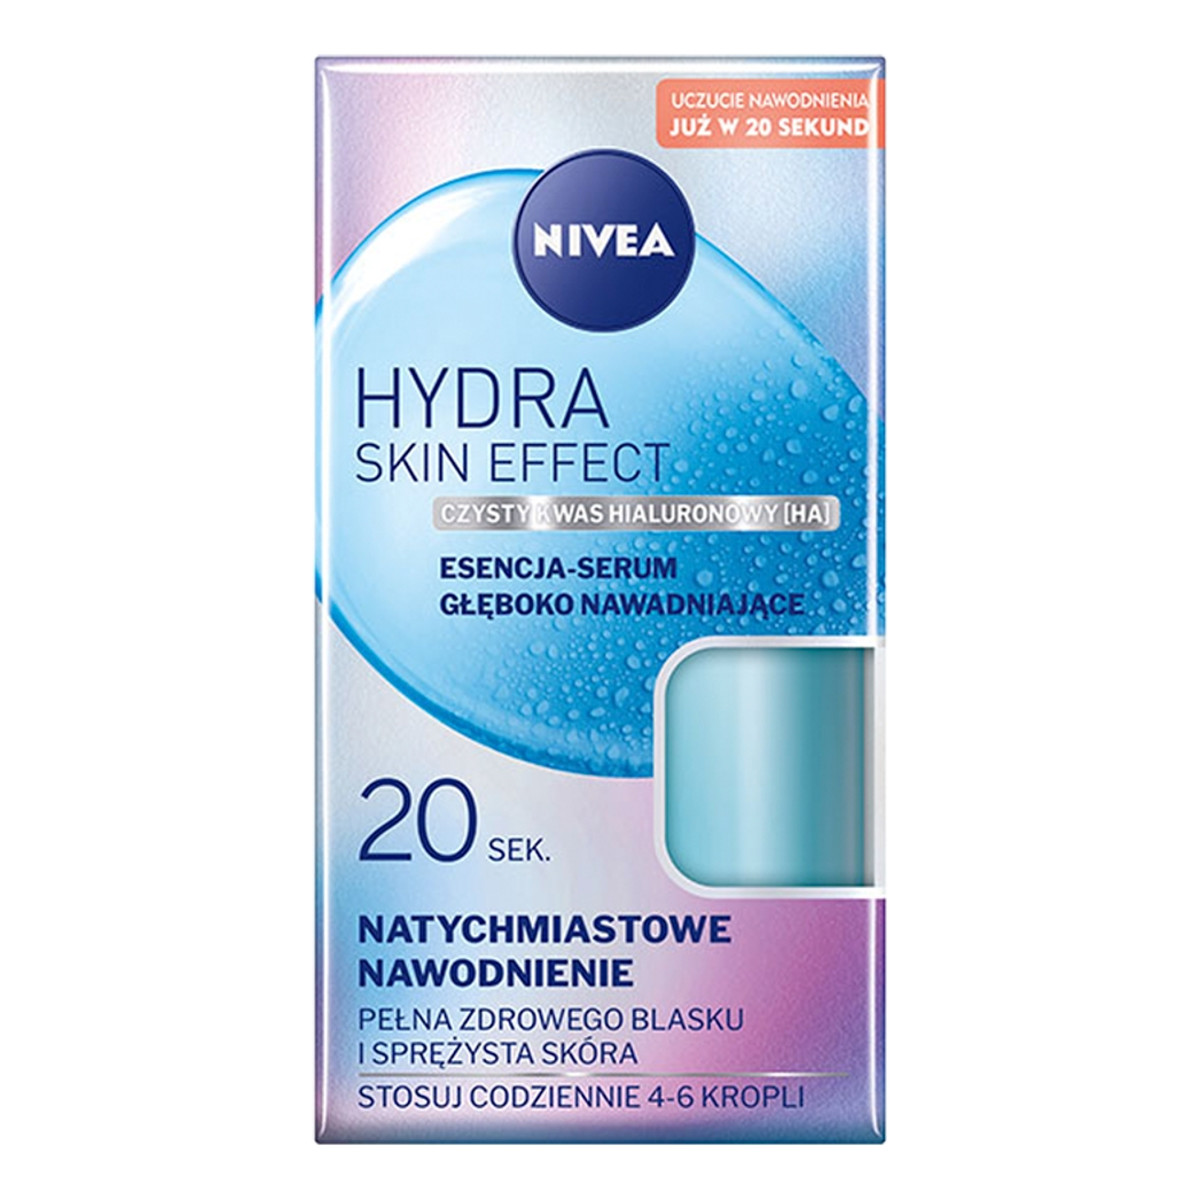 Nivea Hydra Skin Effect esensja-serum głęboko nawadniające 100ml